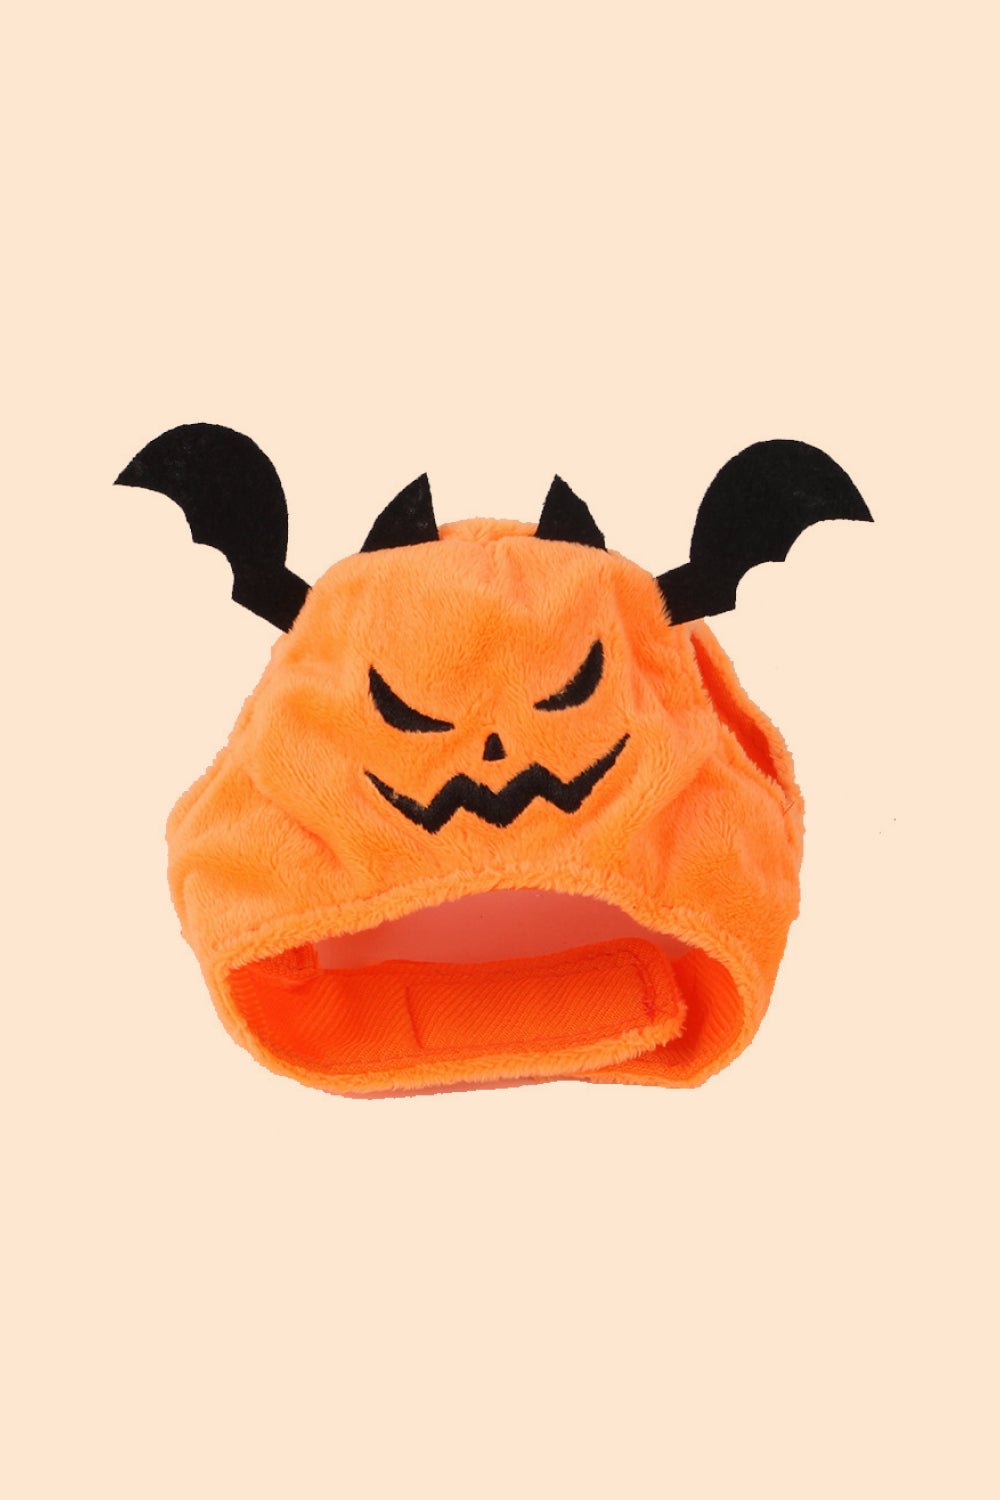 Halloween Pet 2-Pack Jack-O-Lantern with Bat Wings Costume Hat Set